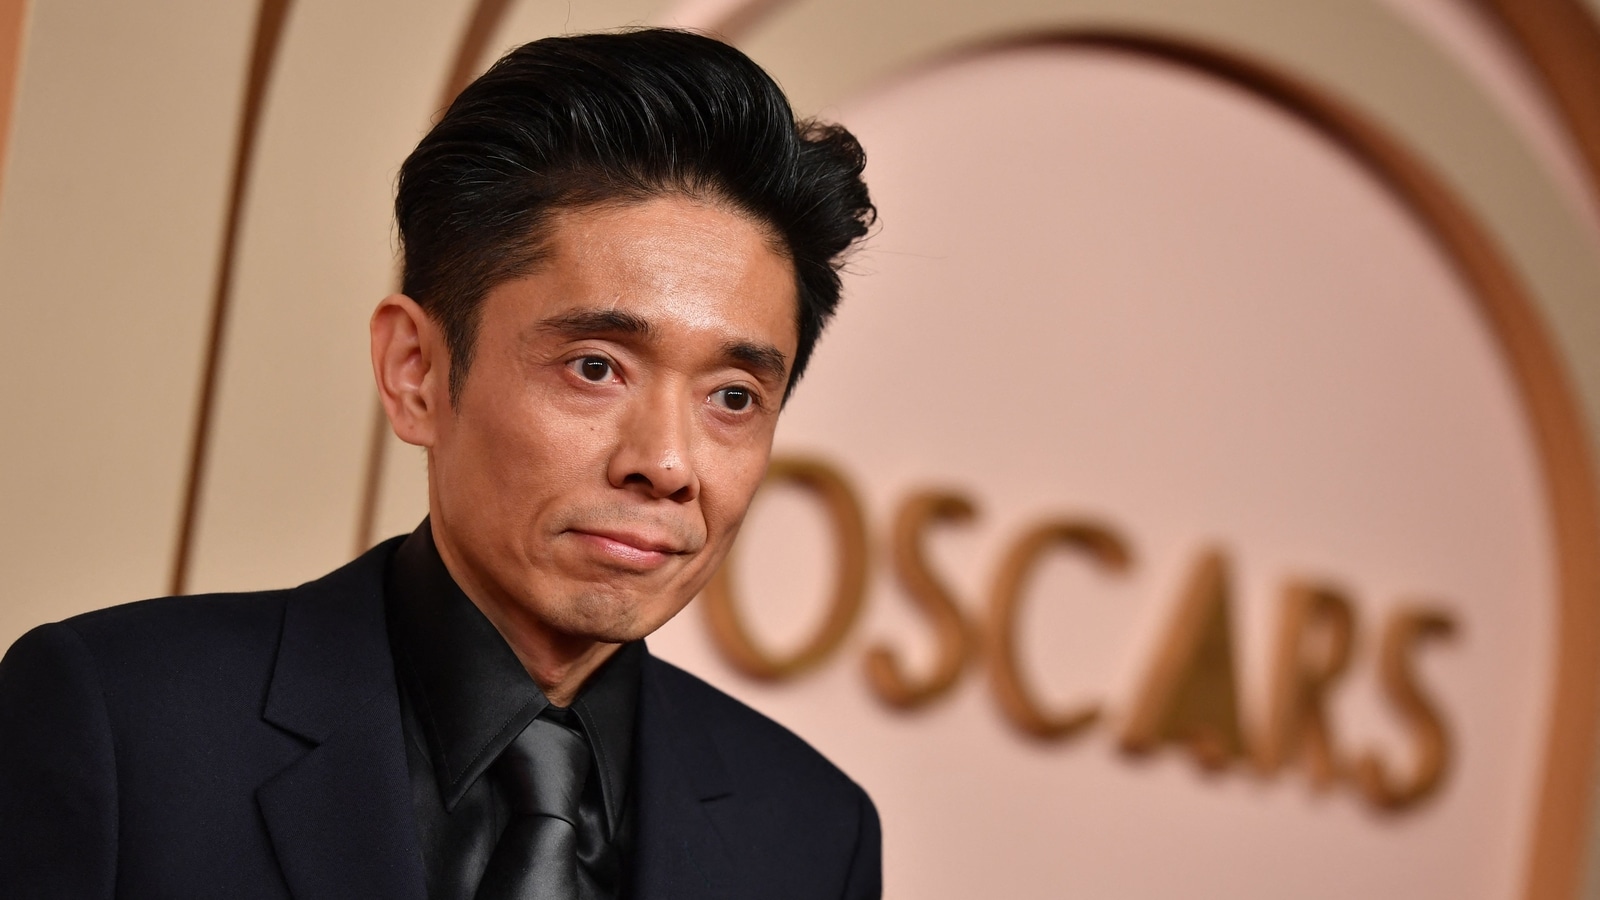 Oscar-nominated makeup genius Kazu Hiro comes full circle with Maestro, transforming Bradley Cooper to Leonard Bernstein